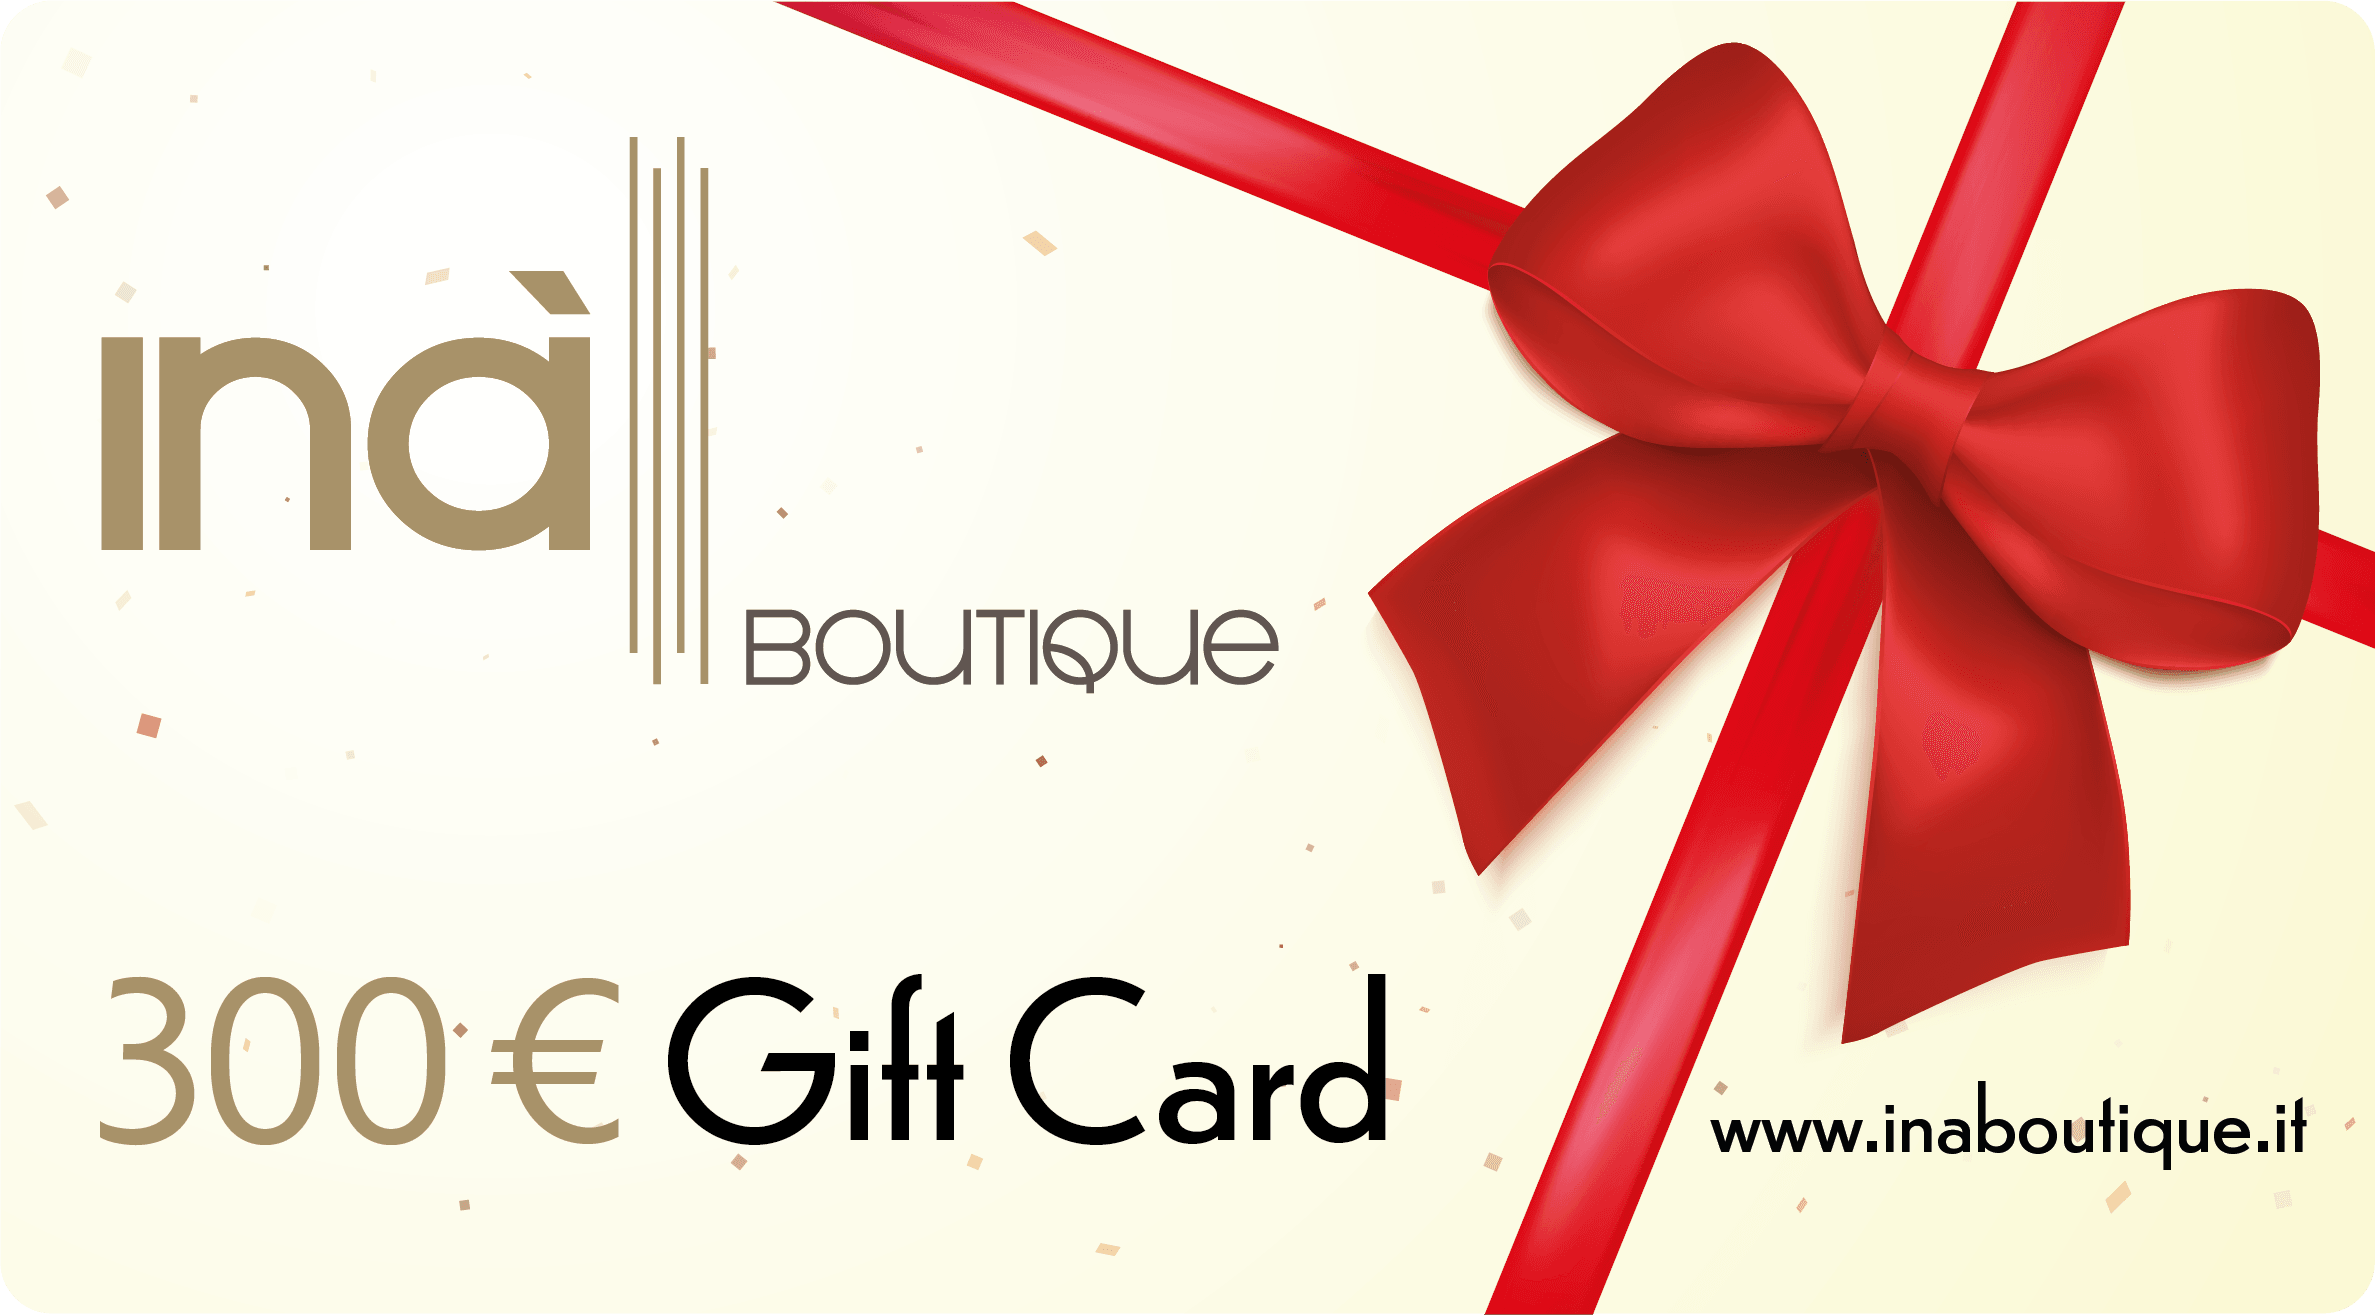 300 € Gift Card - Inà Boutique - Inà Boutique